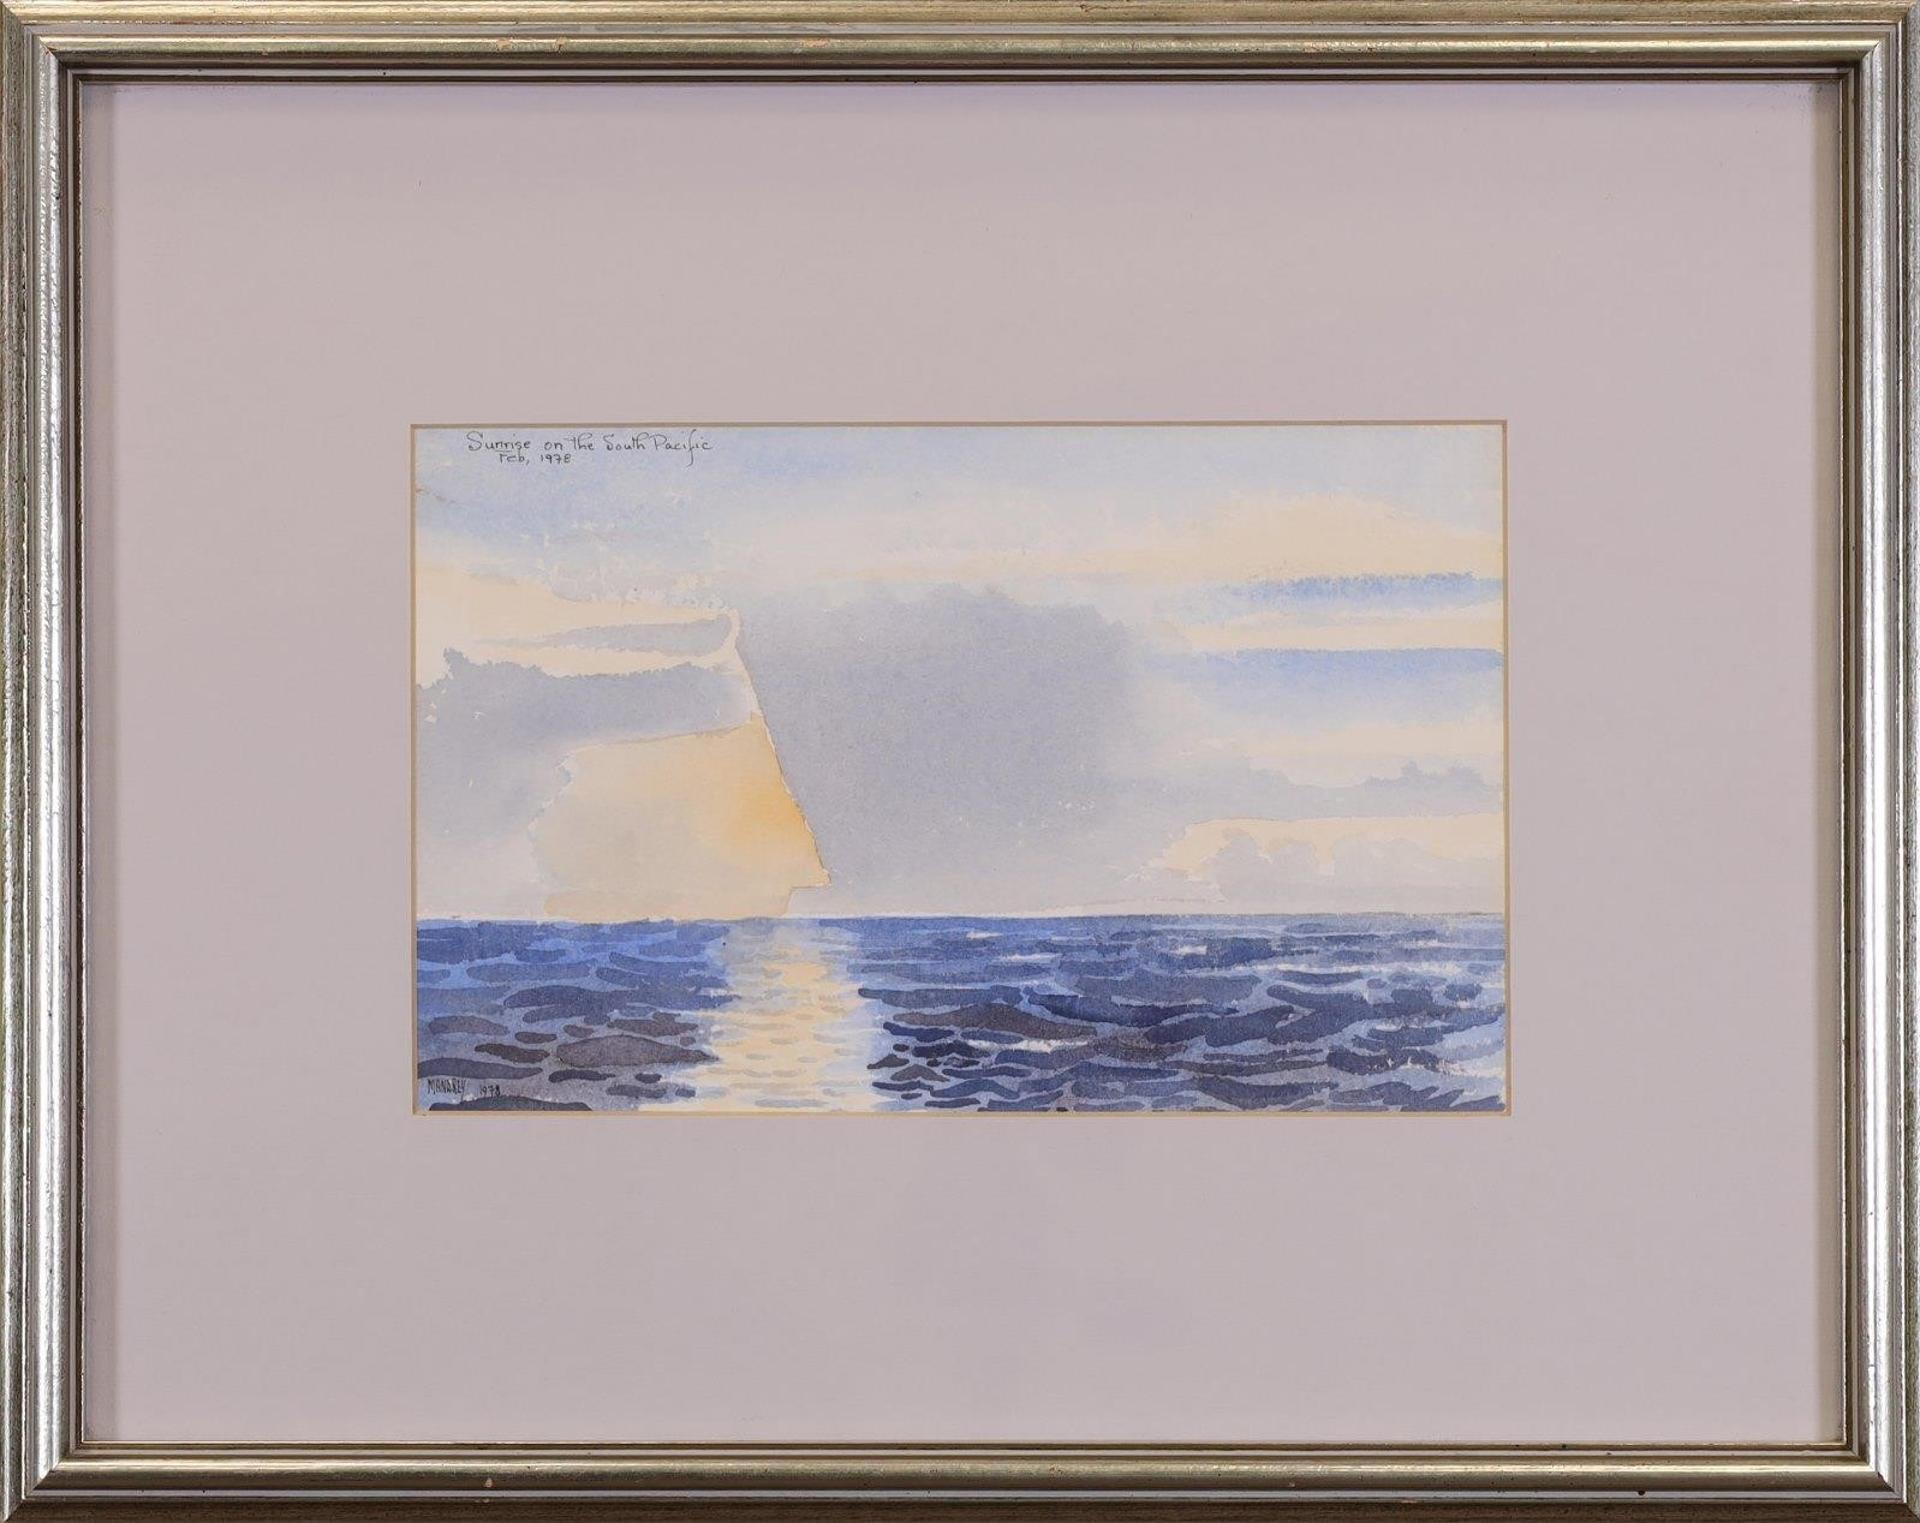 Thelma Alberta Manarey (1913-1984) - Sunrise On The South Pacific; 1978